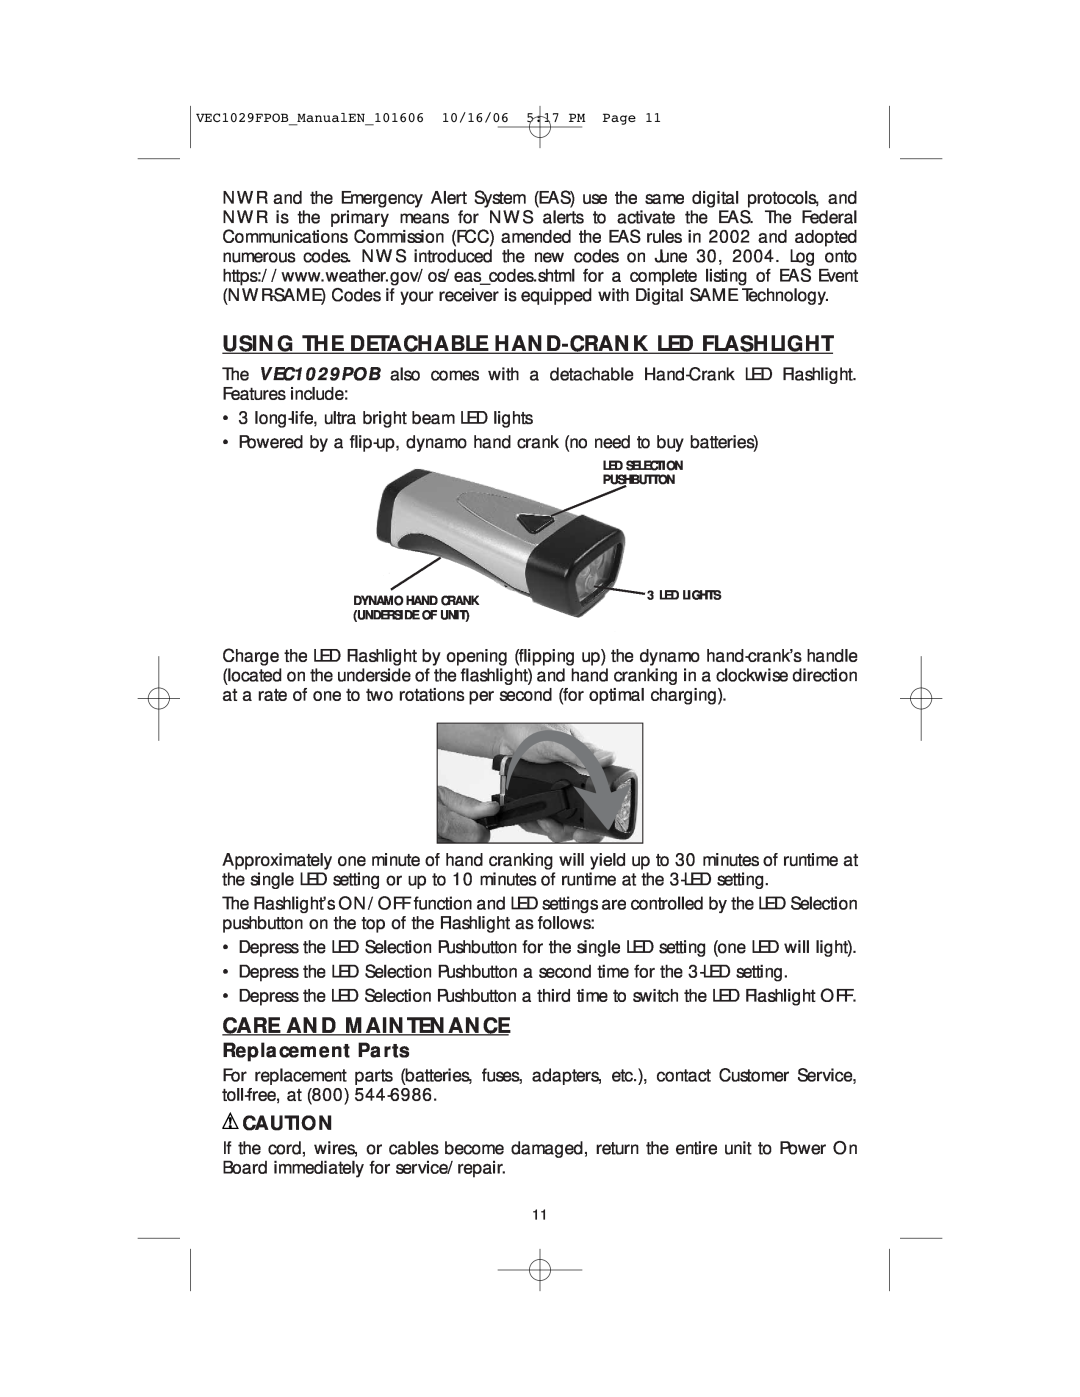 Energy Tech Laboratories VEC1029FPOB user manual Using The Detachable Hand-Crank Led Flashlight, Care And Maintenance 